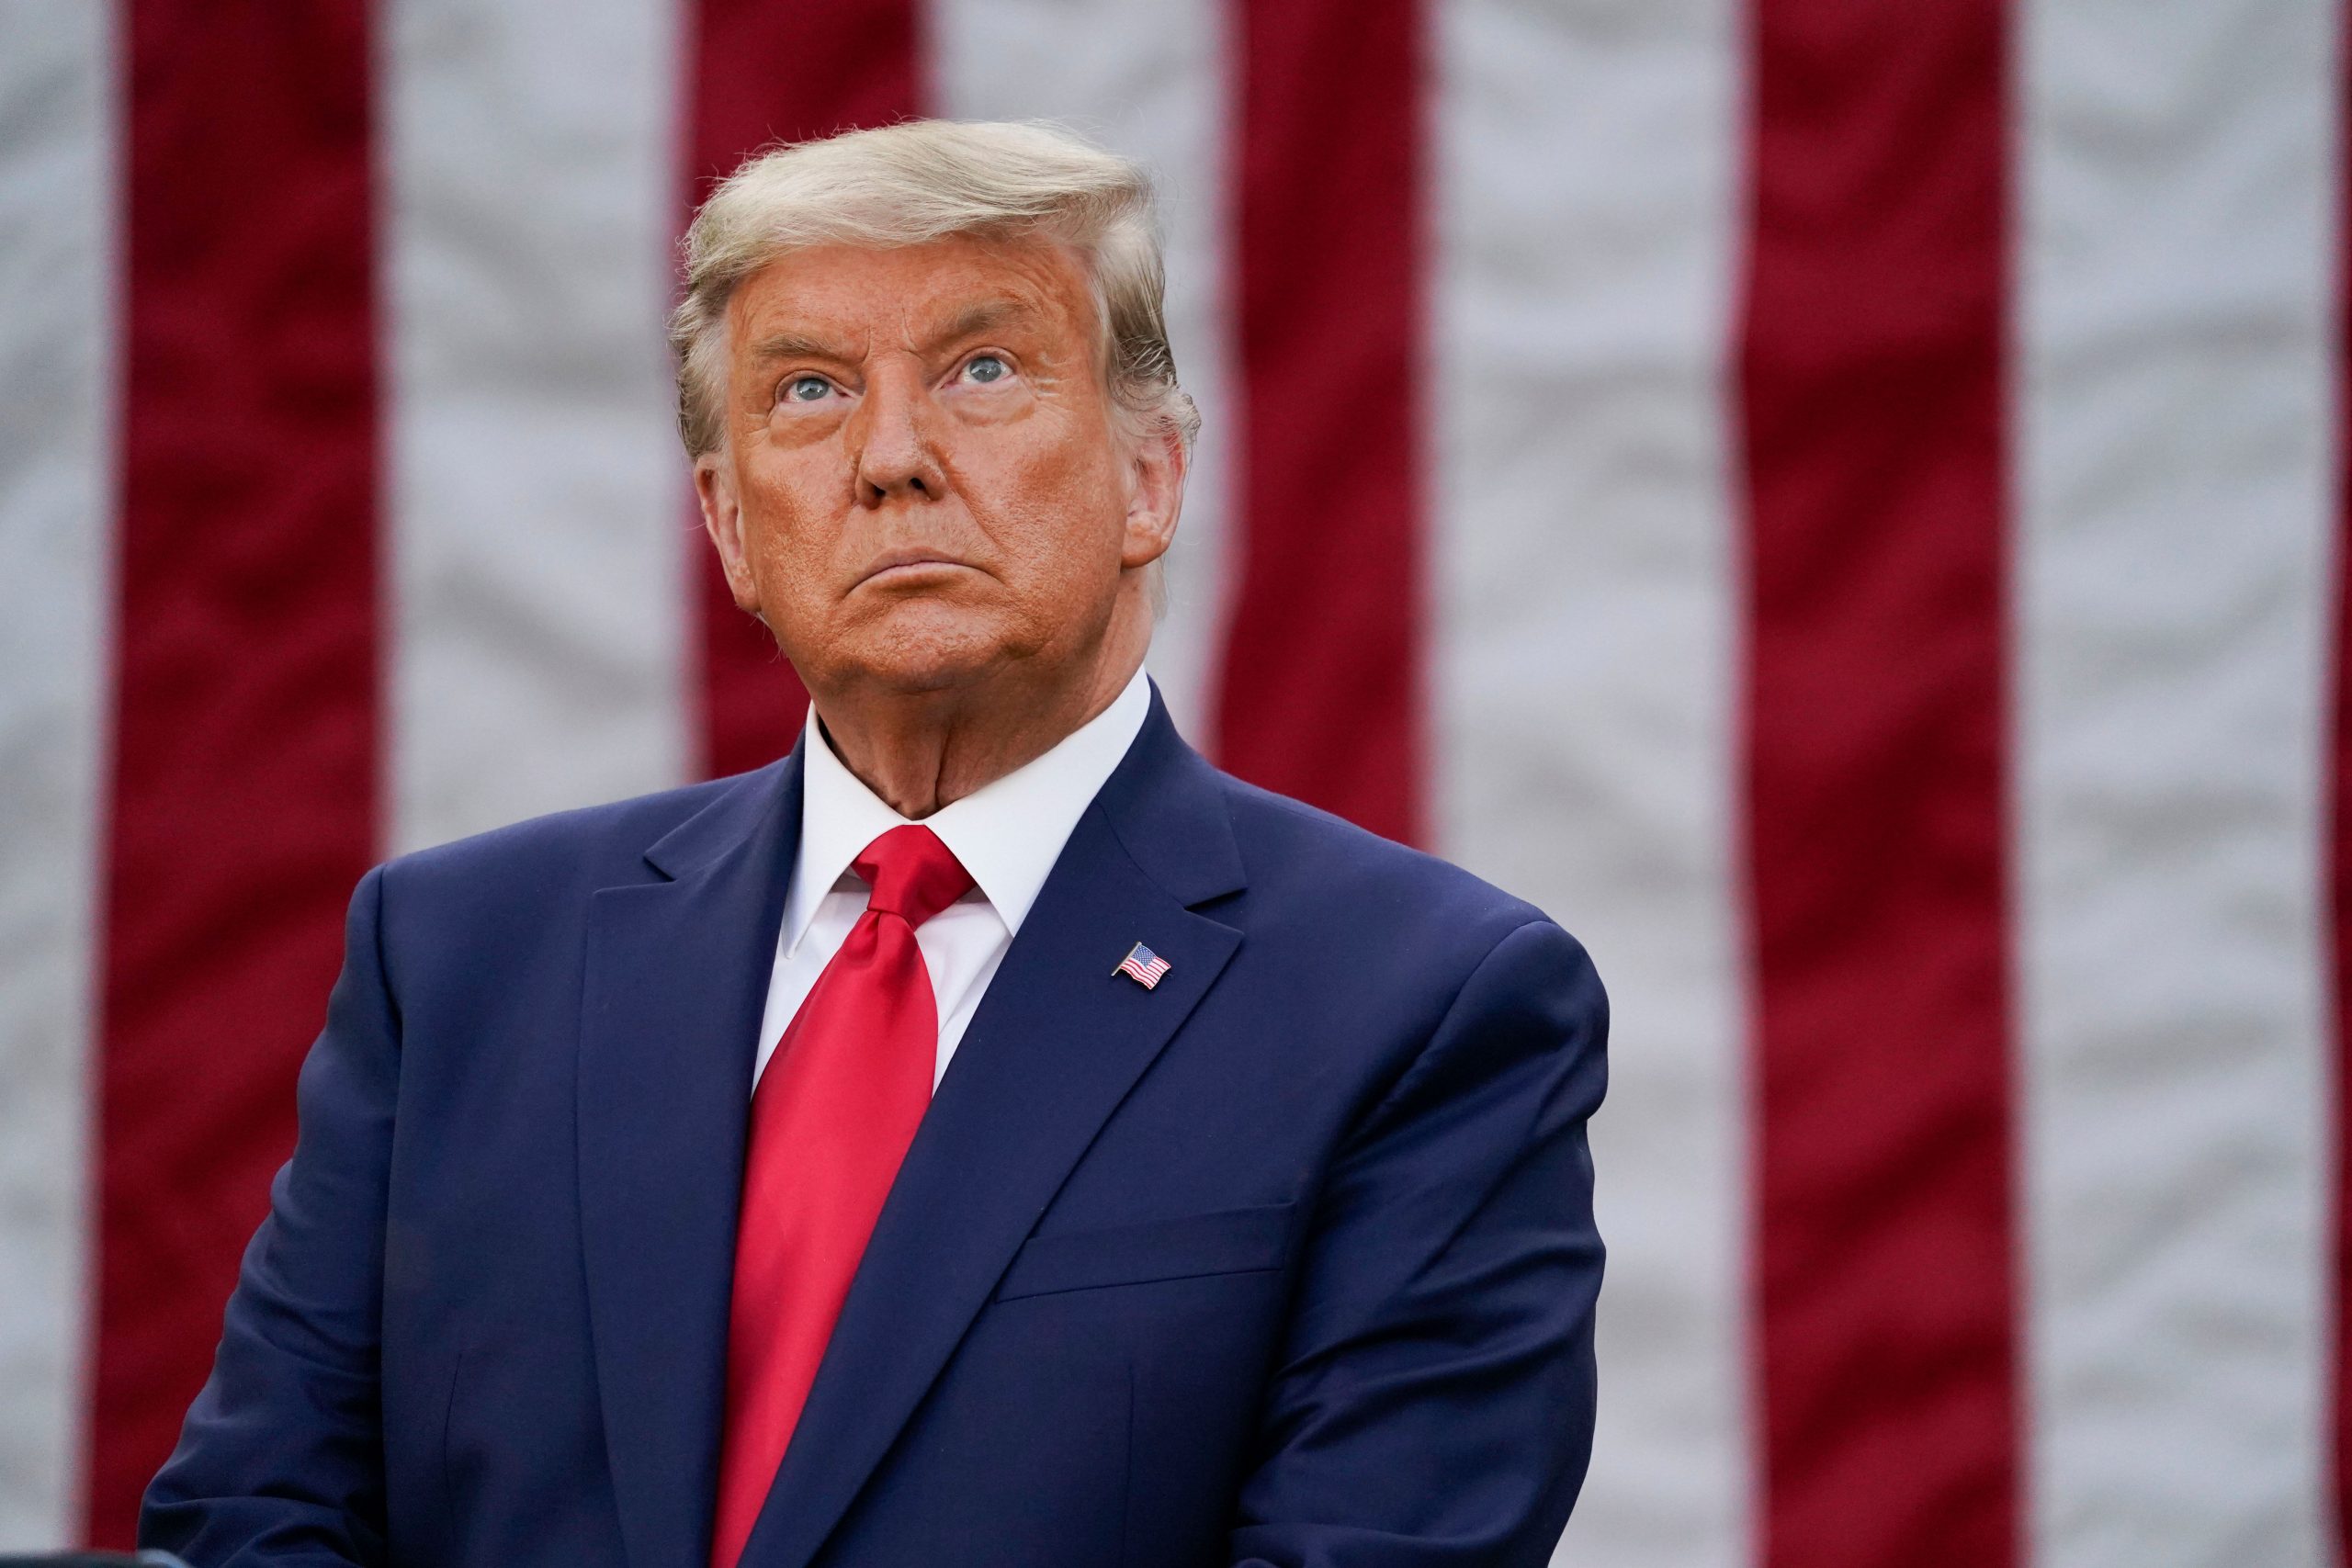 Donald Trump will not testify in impeachment trial, says senior advisor